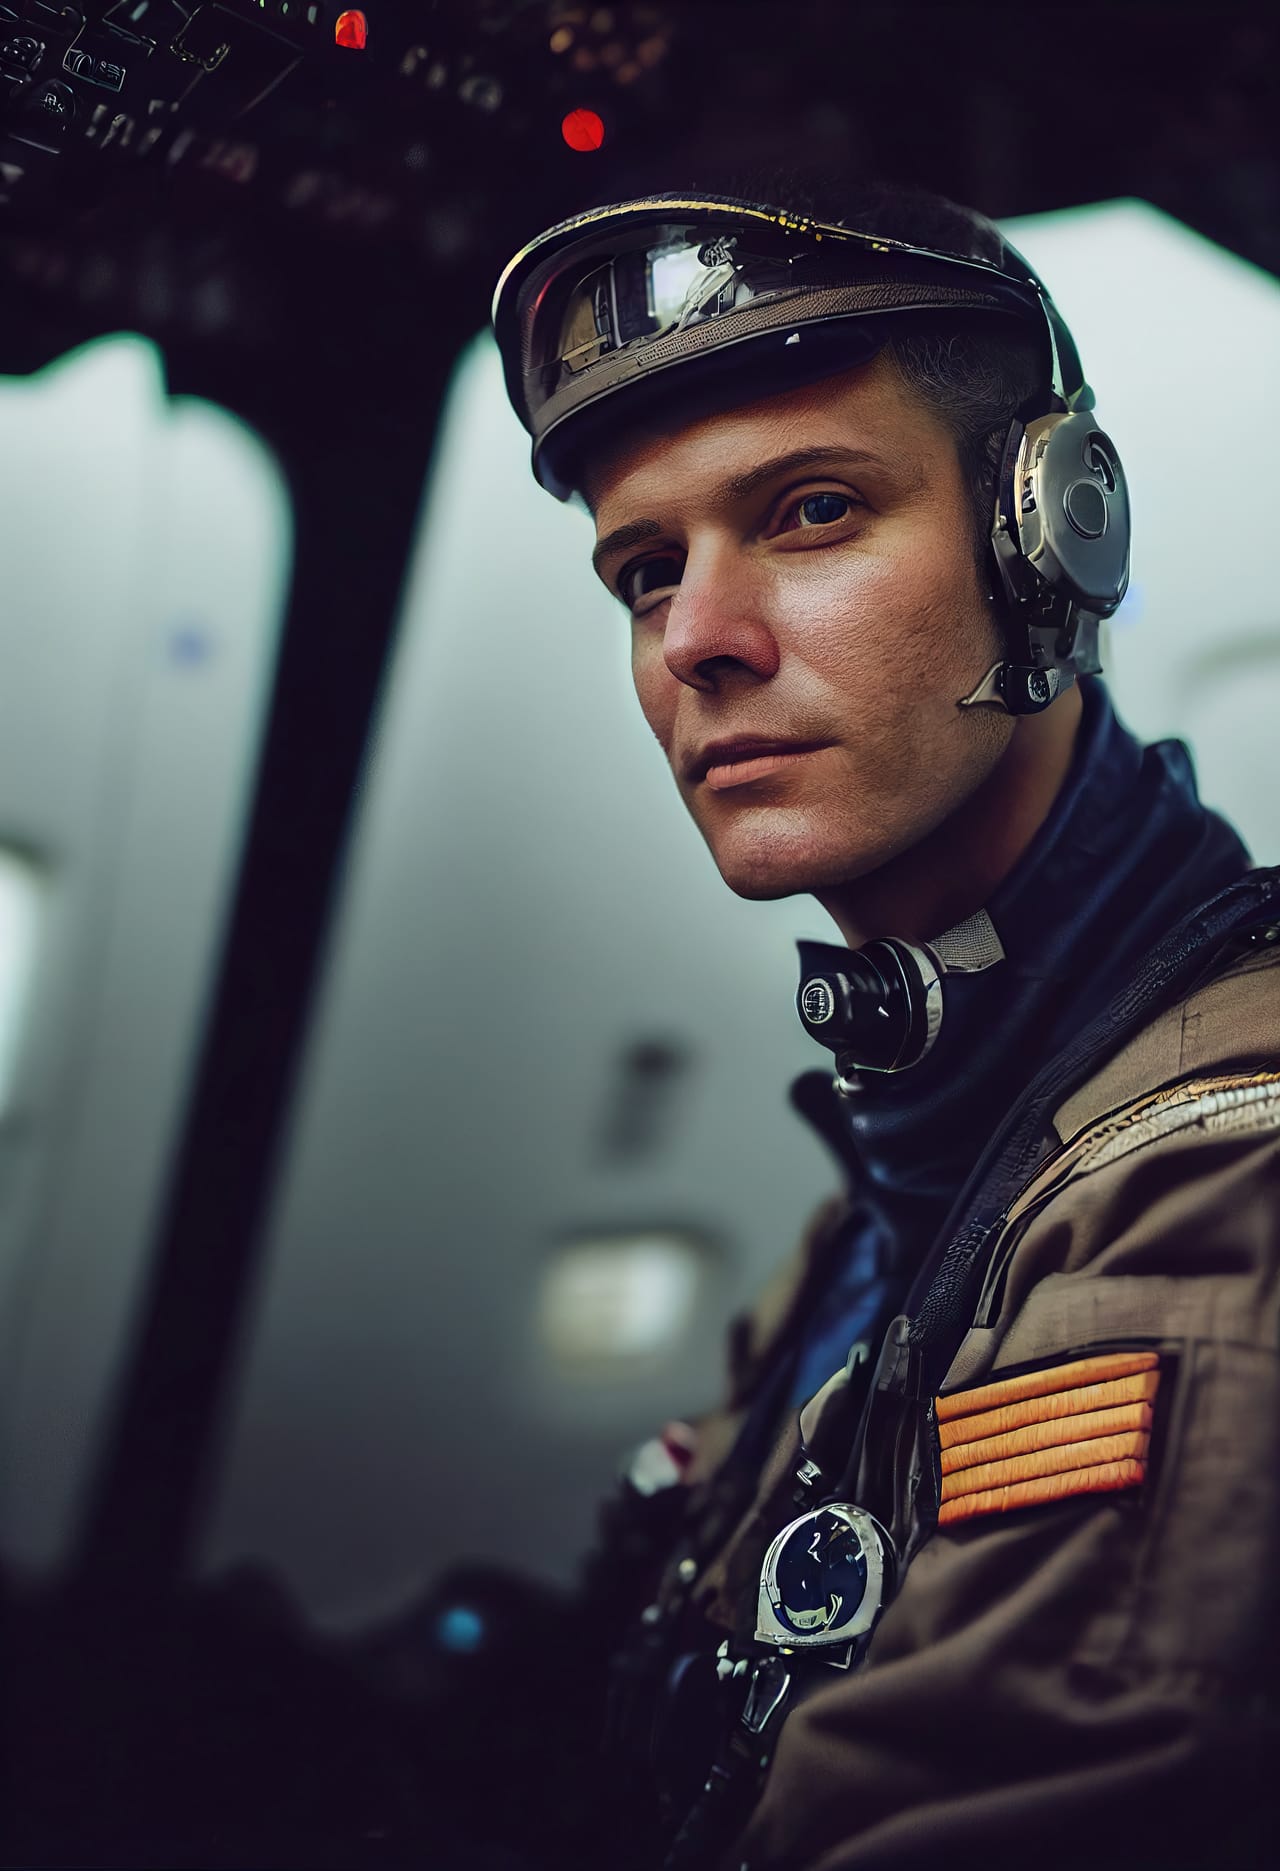 Military fighter pilot cockpit his plane wearing helmet